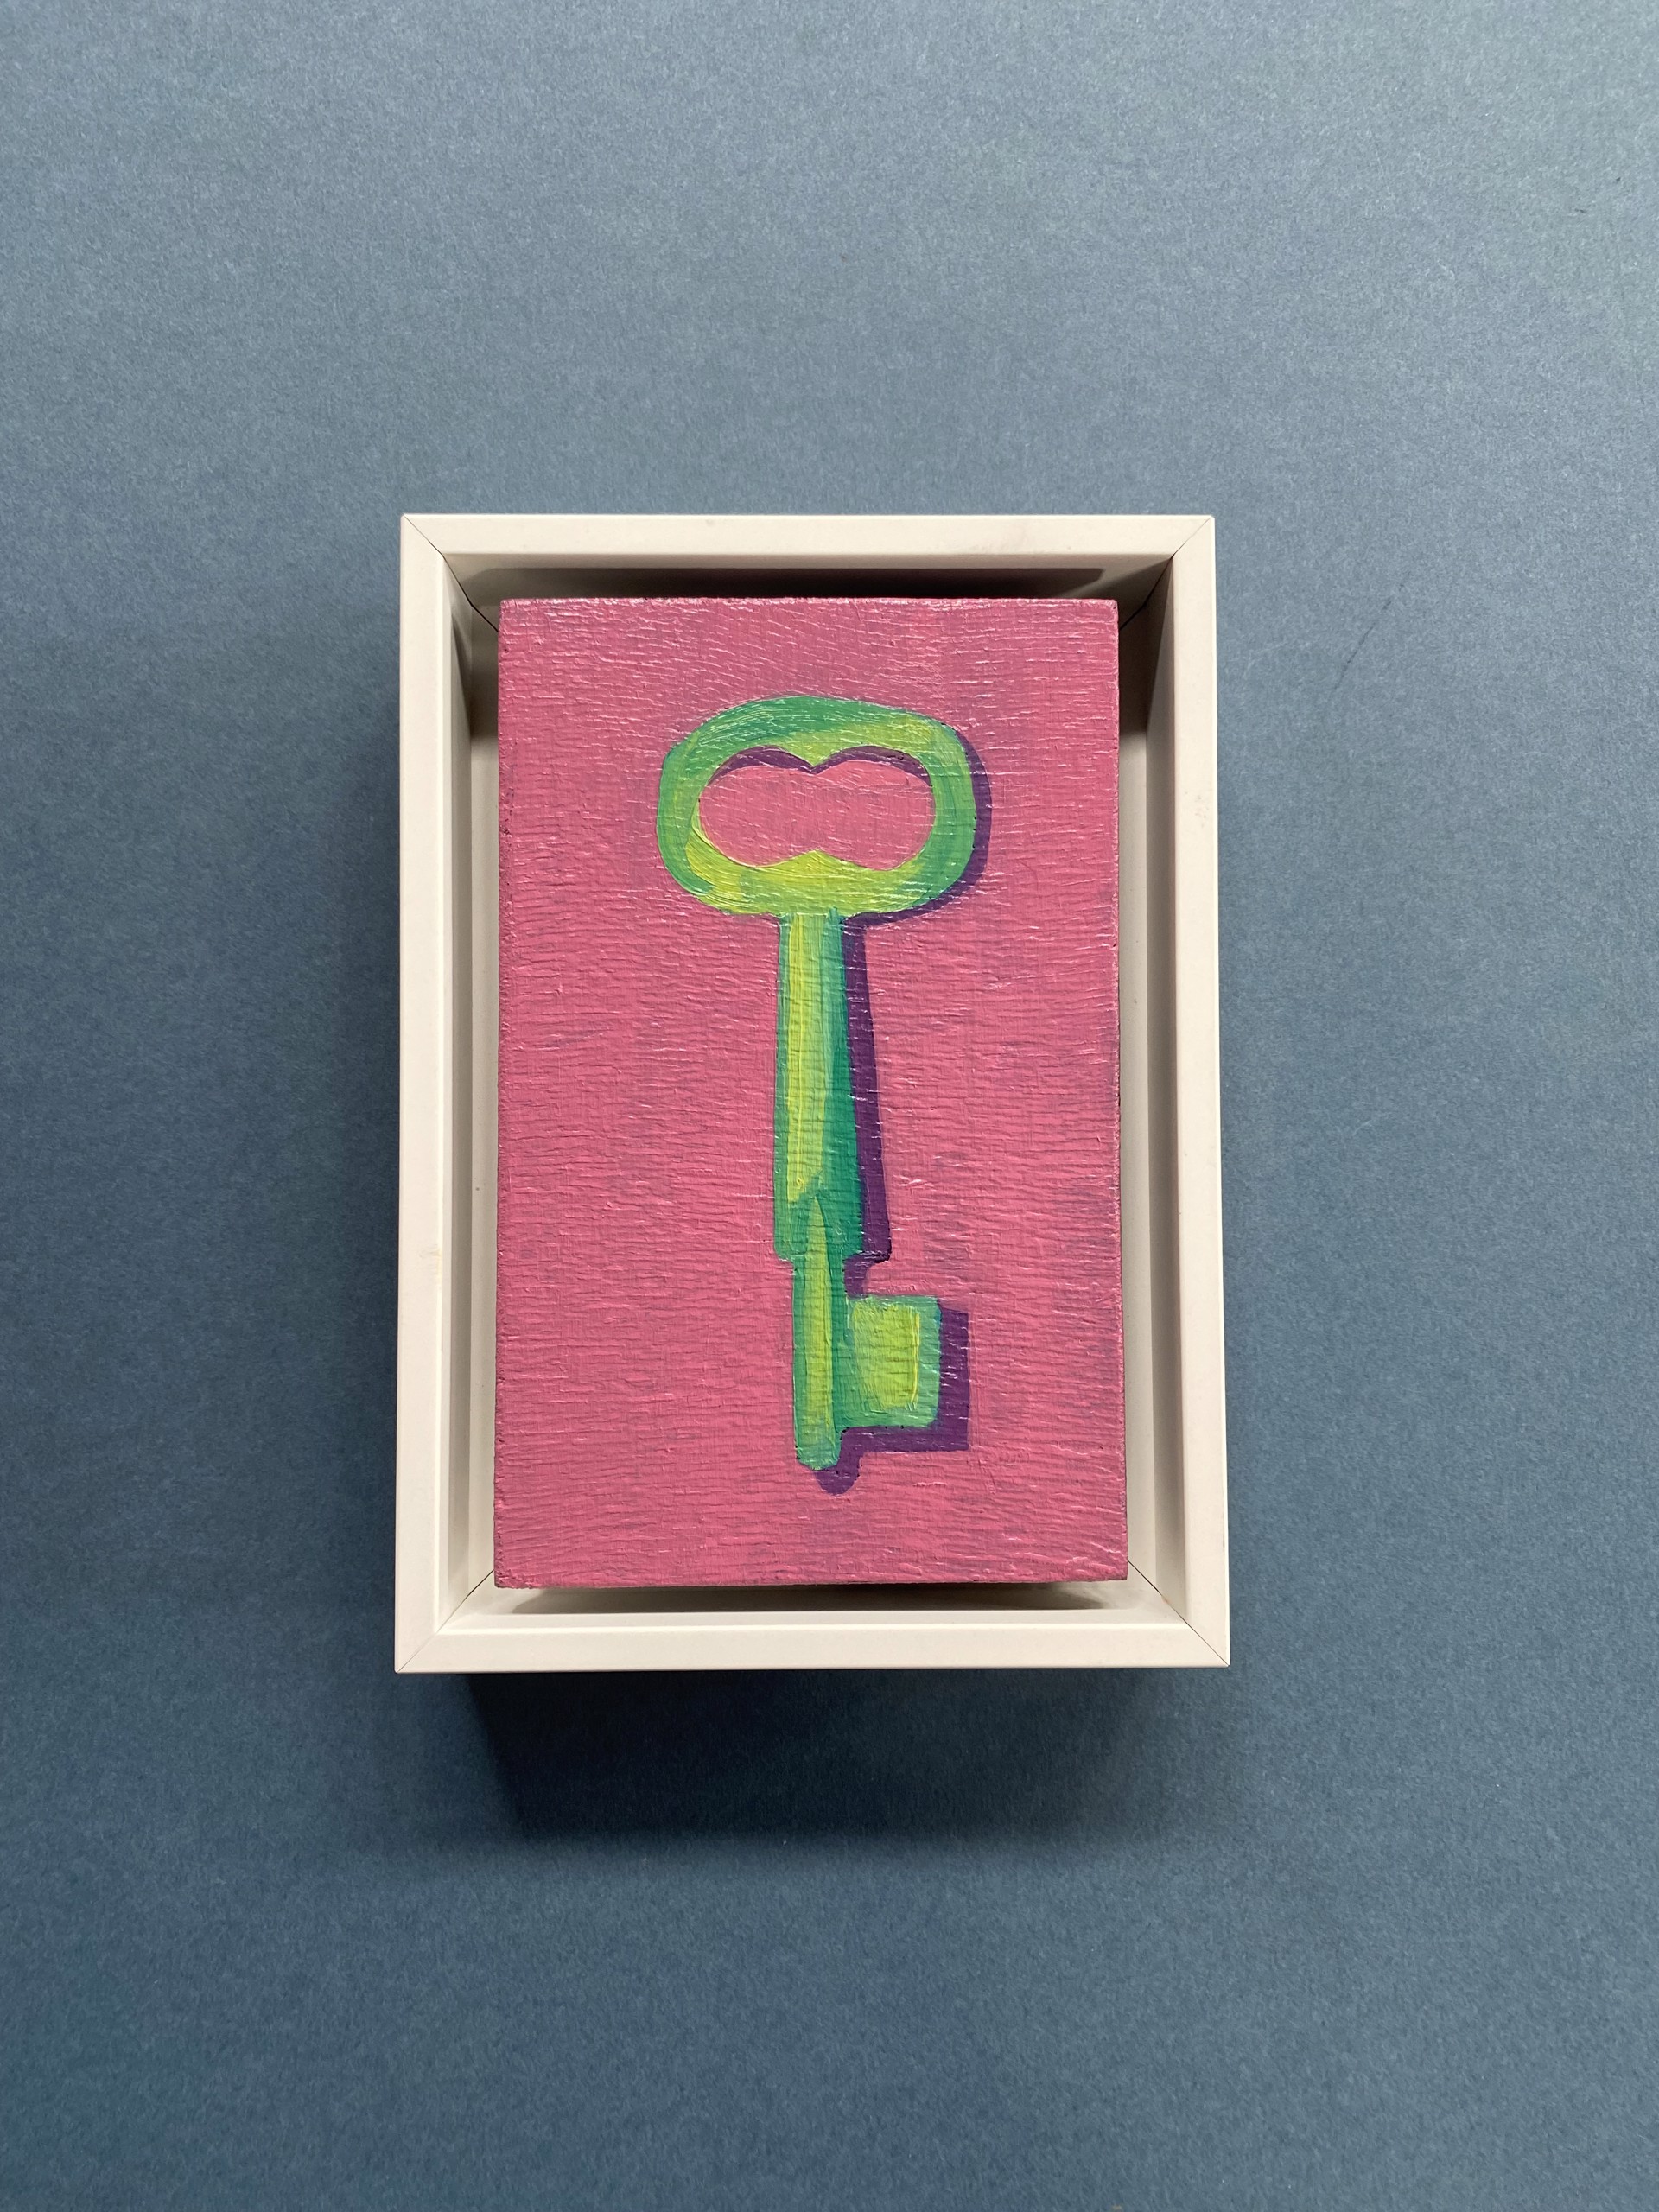 Key No. 1 by Stephen Wells